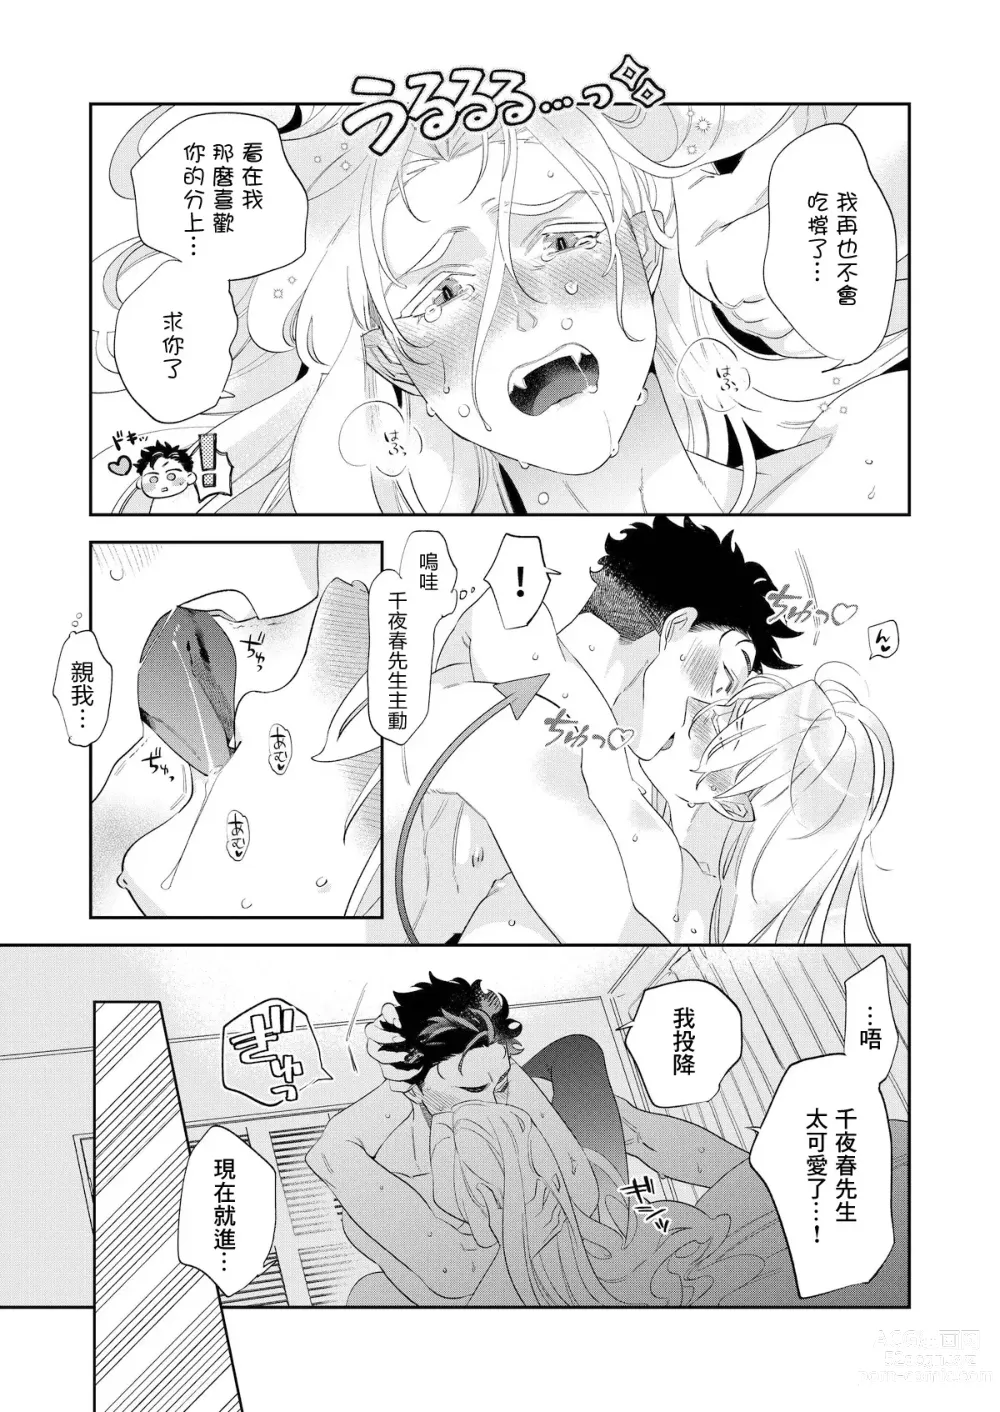 Page 13 of manga 心爱的退役×阳痿×淫魔前辈, 让我来治好你吧? 番外